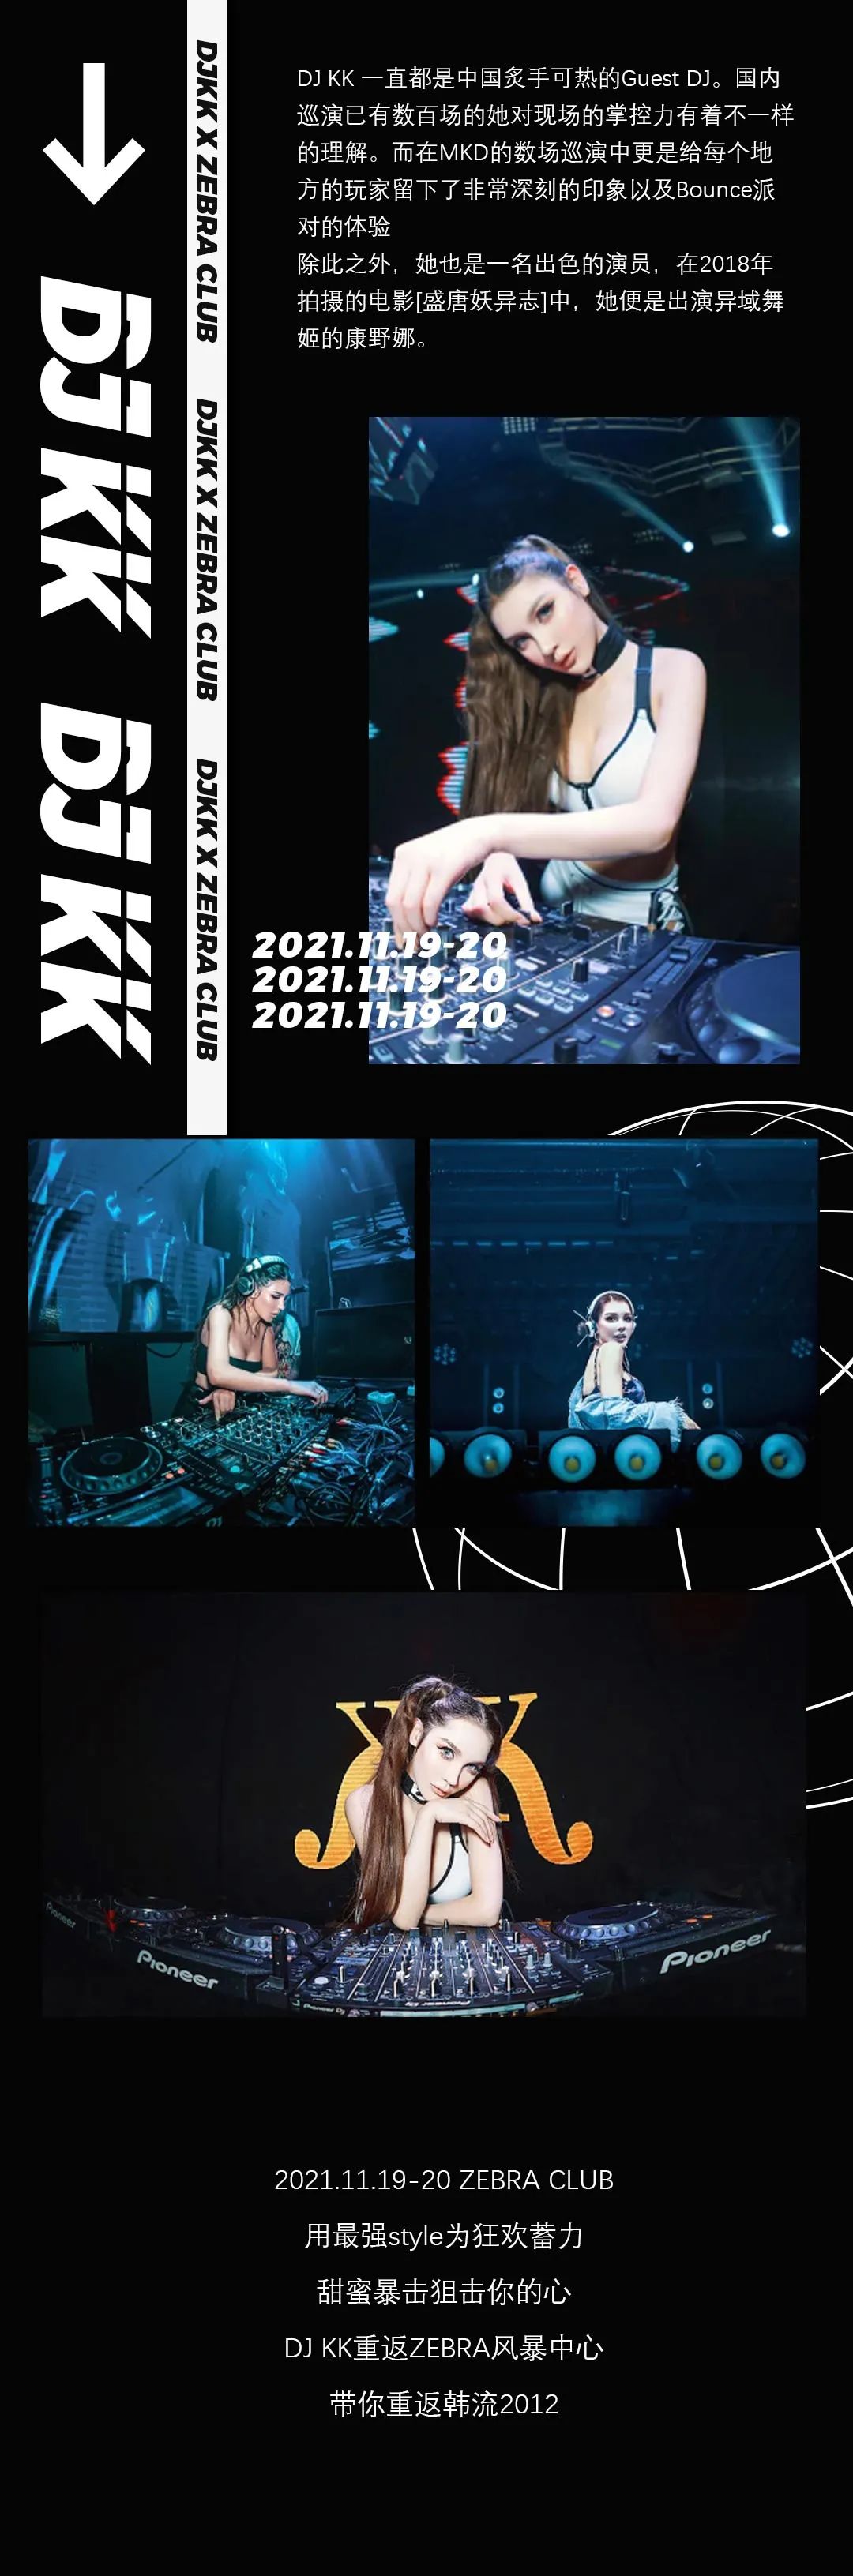 ZEBRA WU'HAN丨 NOV.20 DJ KK撕裂时空带你重回韩流！谁的DNA动了？-武汉斑马酒吧/ZEBRA club